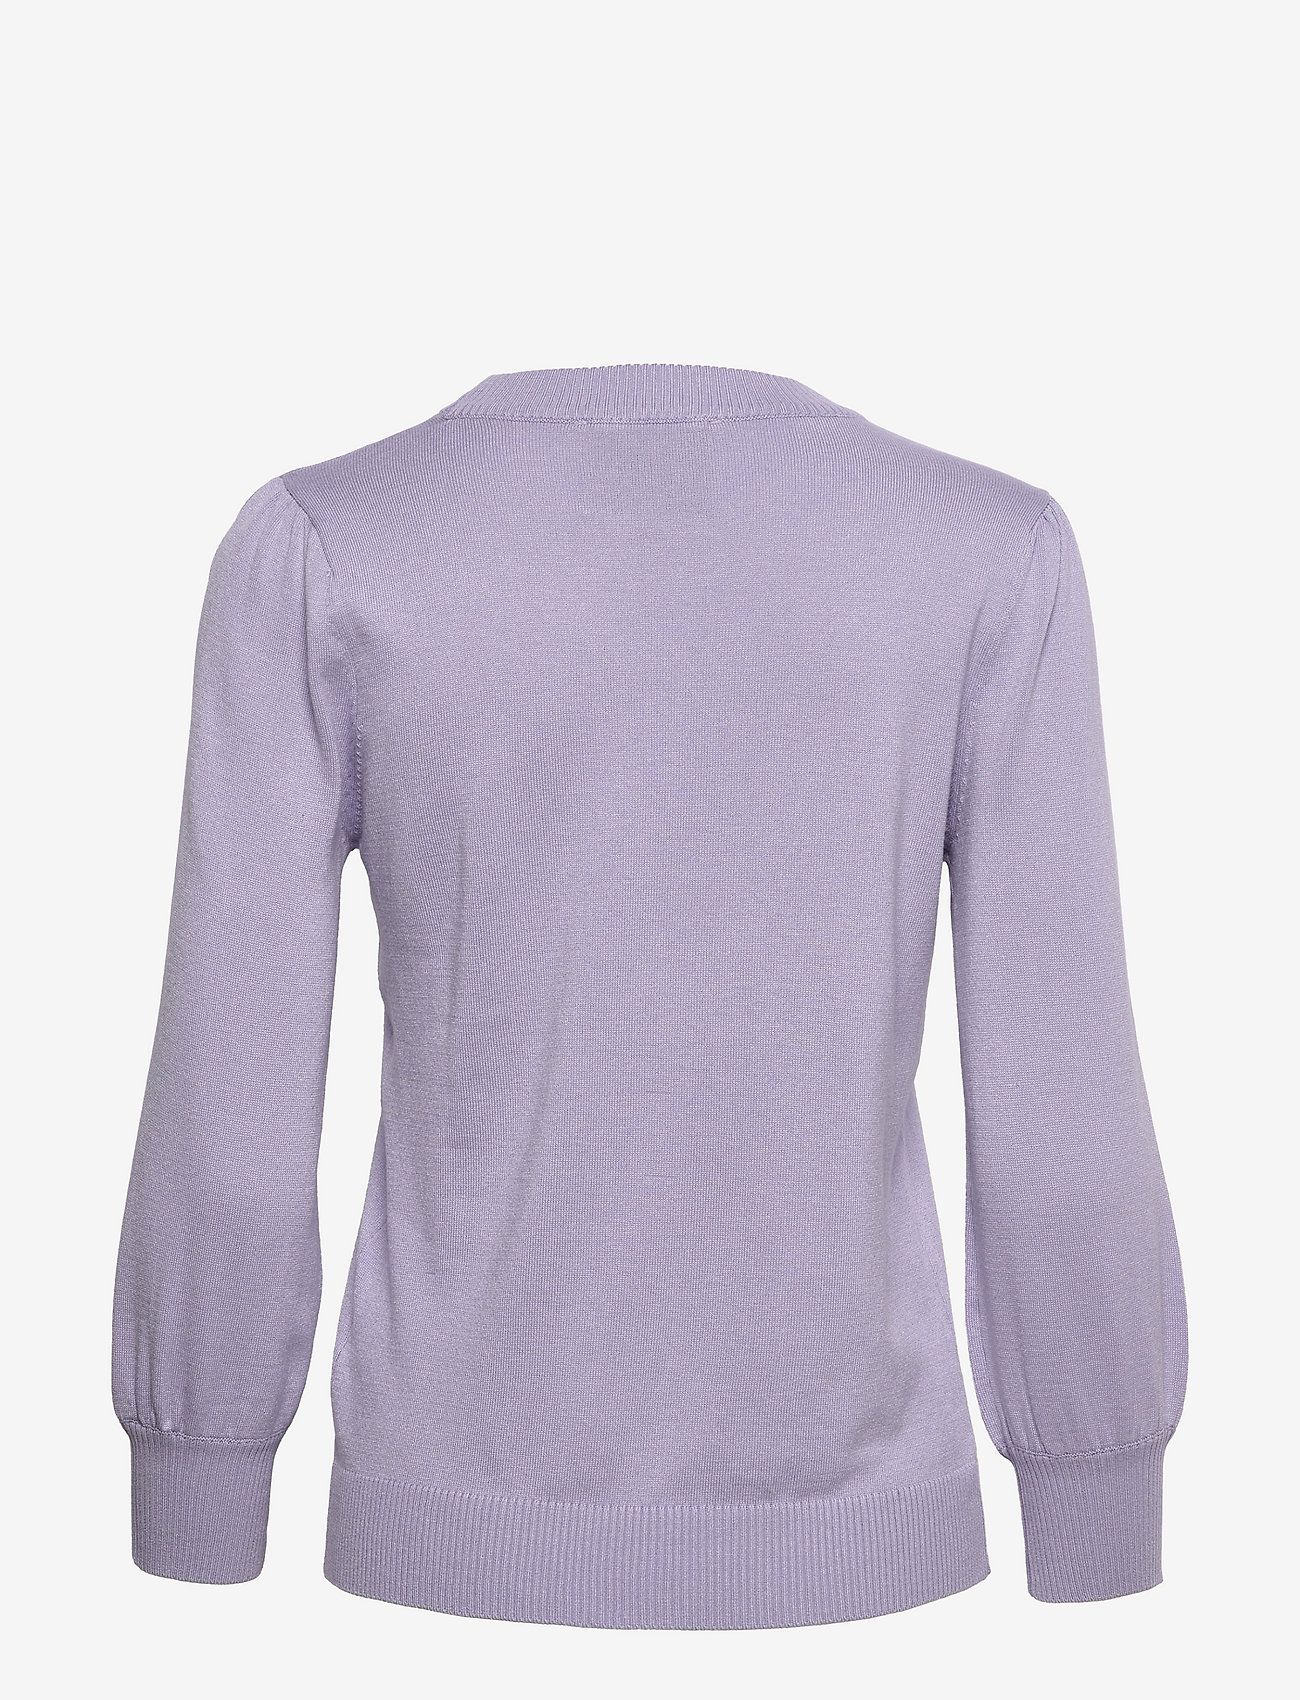 Minus - Mersin Strik Pullover - sweaters - cosmic lavender - 1